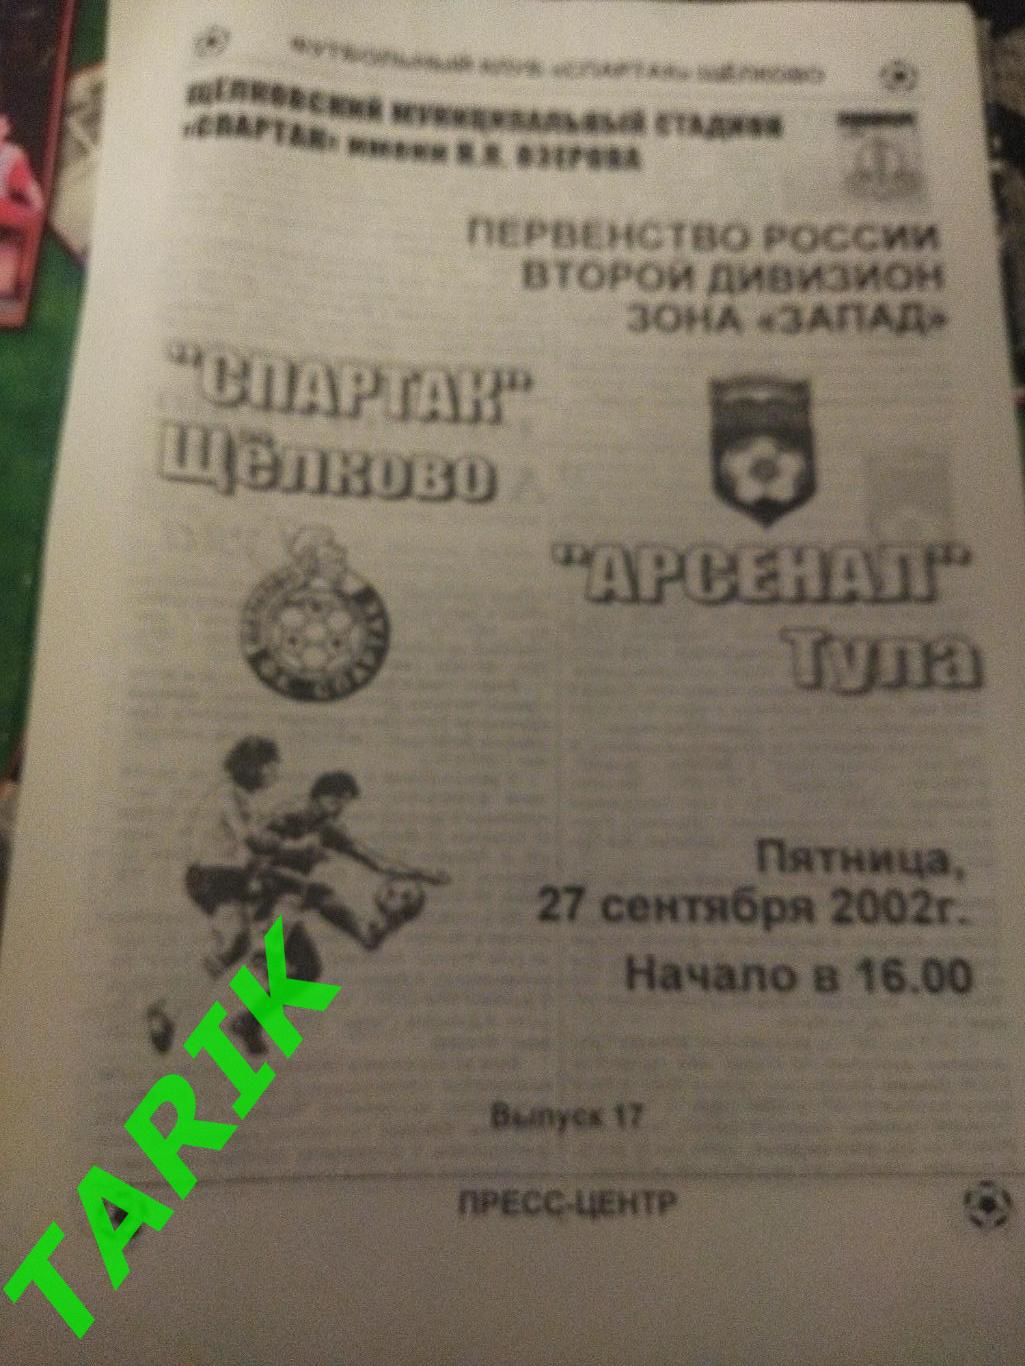 Спартак Щелково - Арсенал Тула 27.09.2002